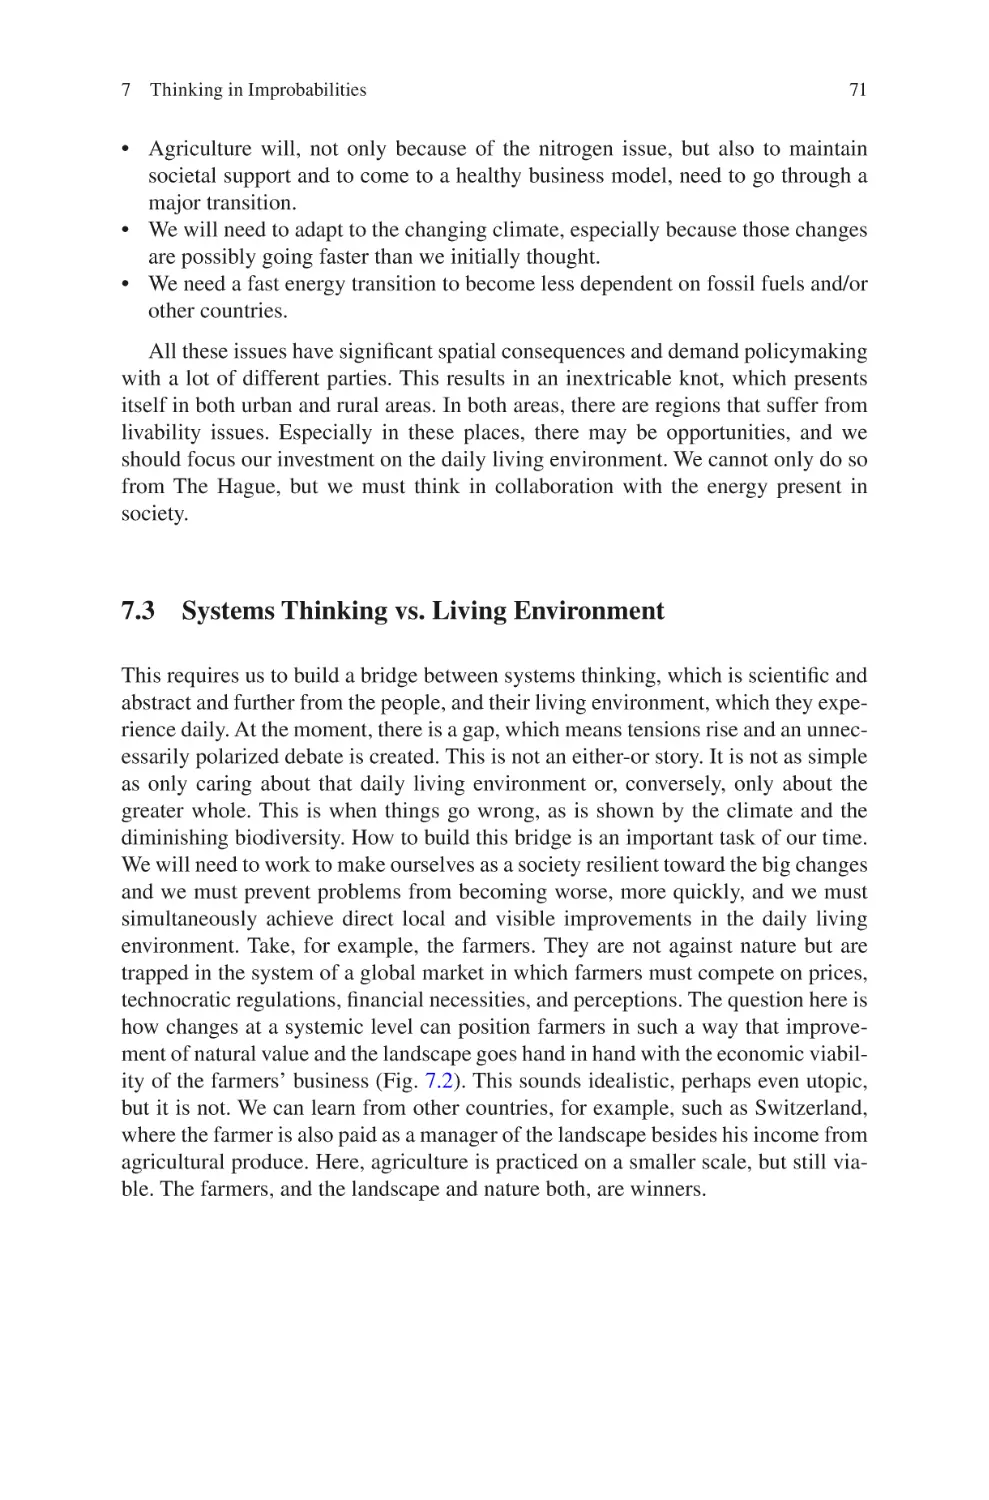 7.3 Systems Thinking vs. Living Environment